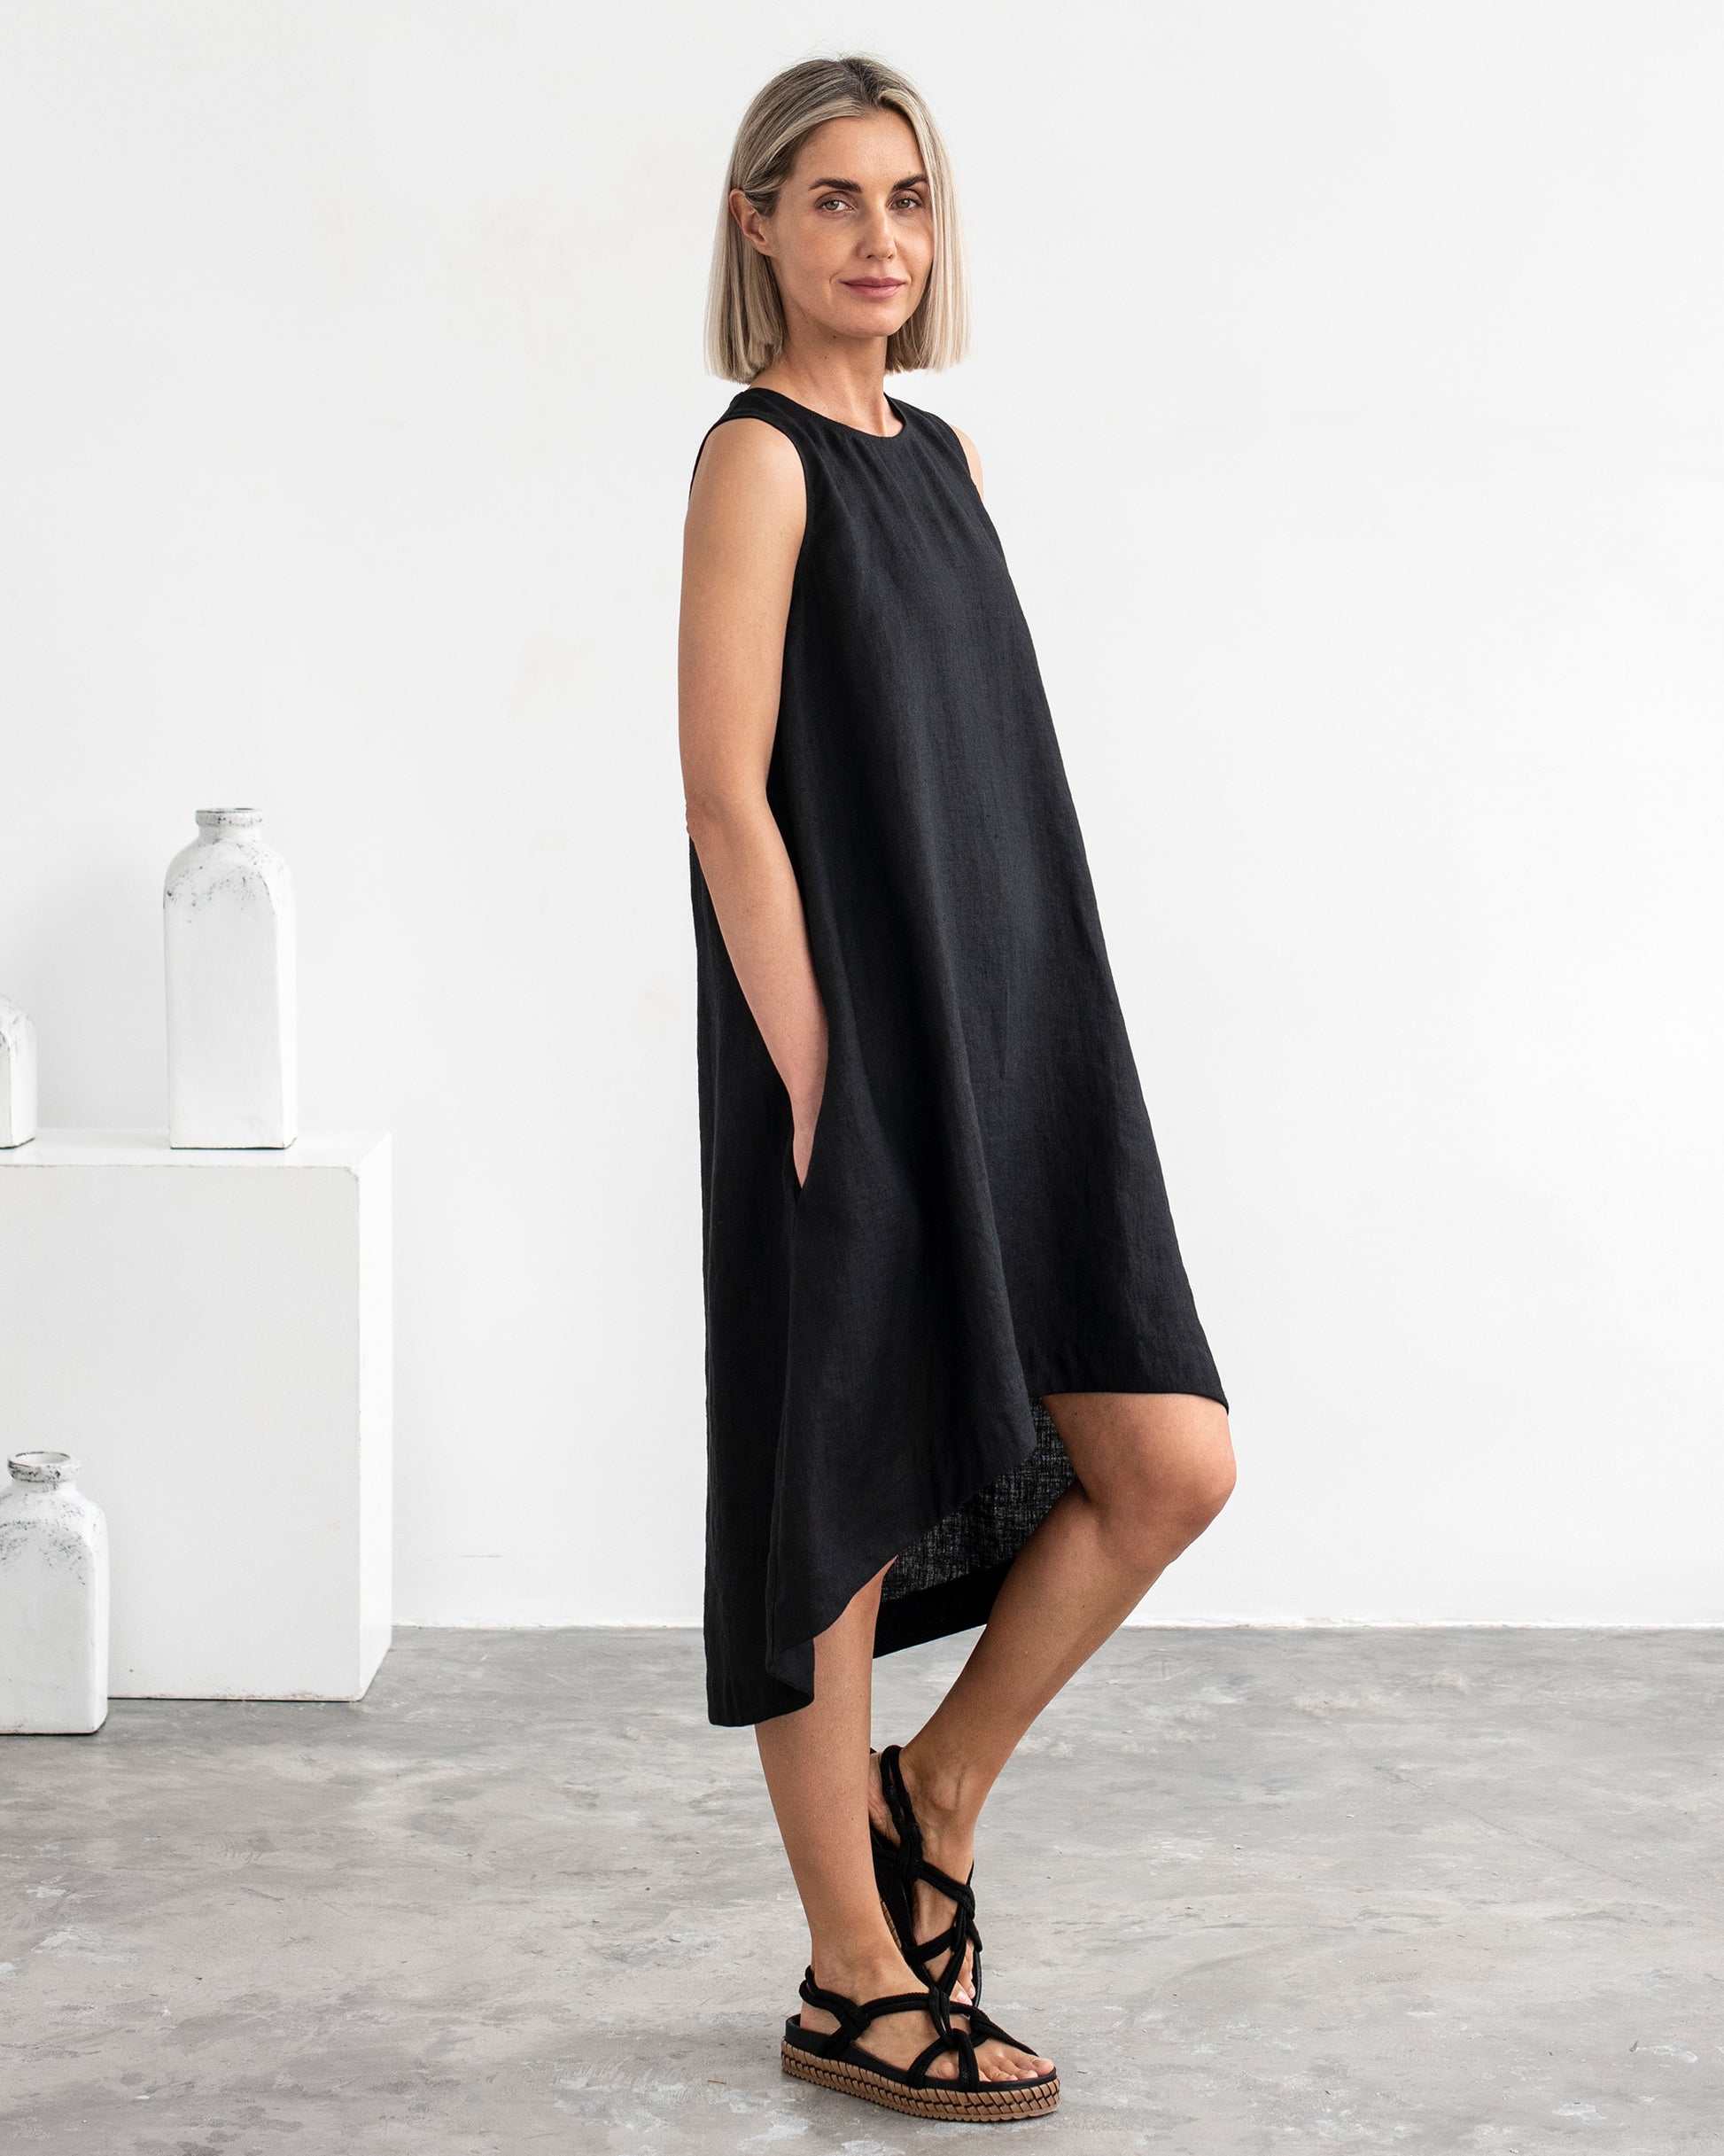 Magic Linen Royal Toscana Linen Dress Review: Why We Love It